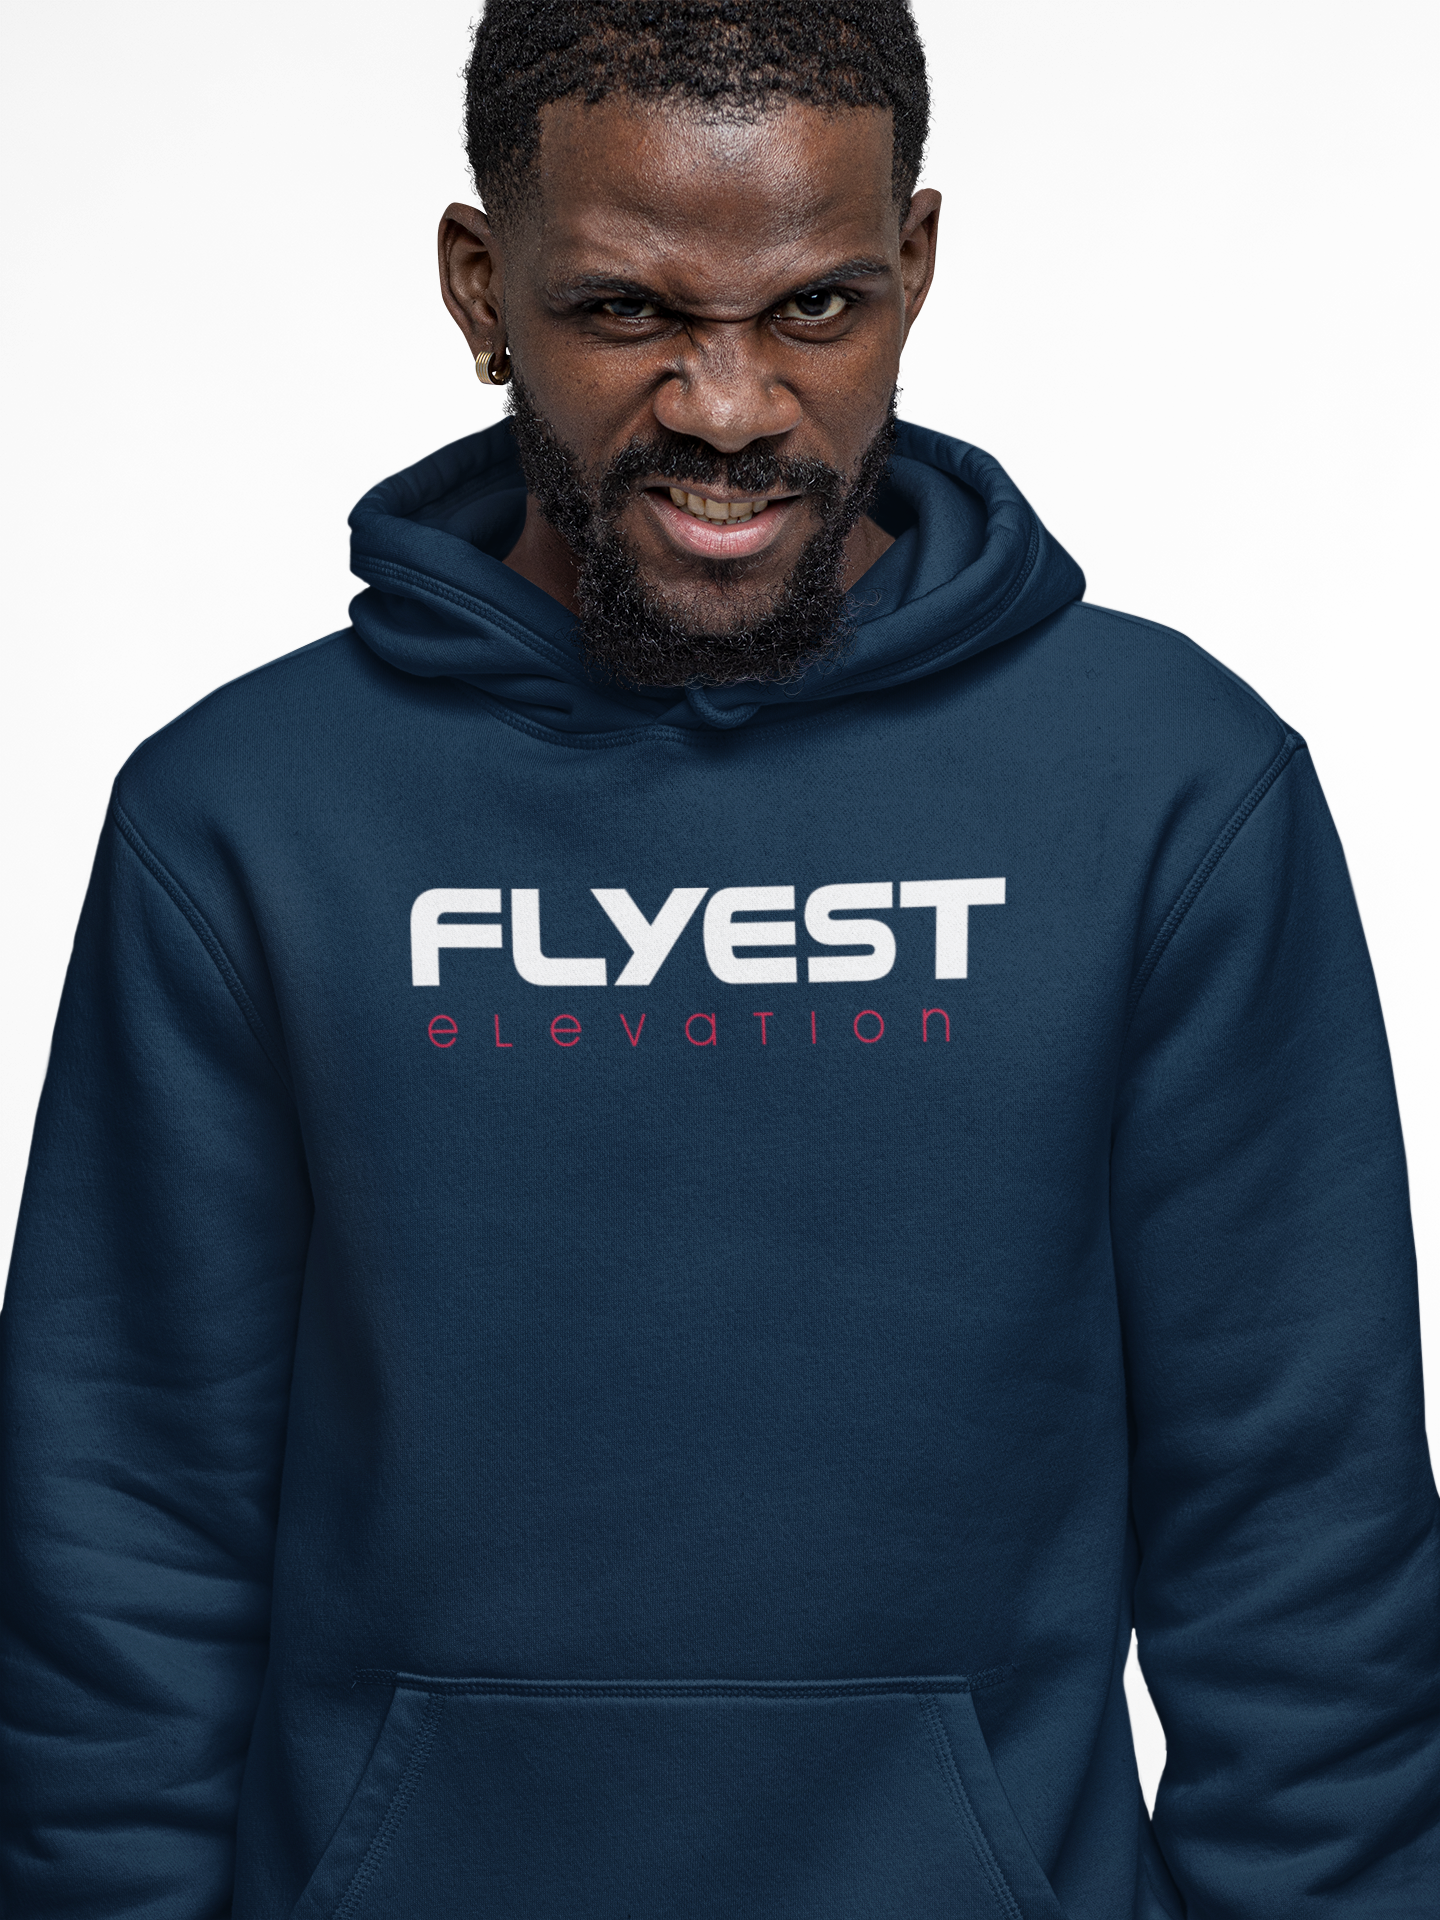 Flyest Elevation hoodie